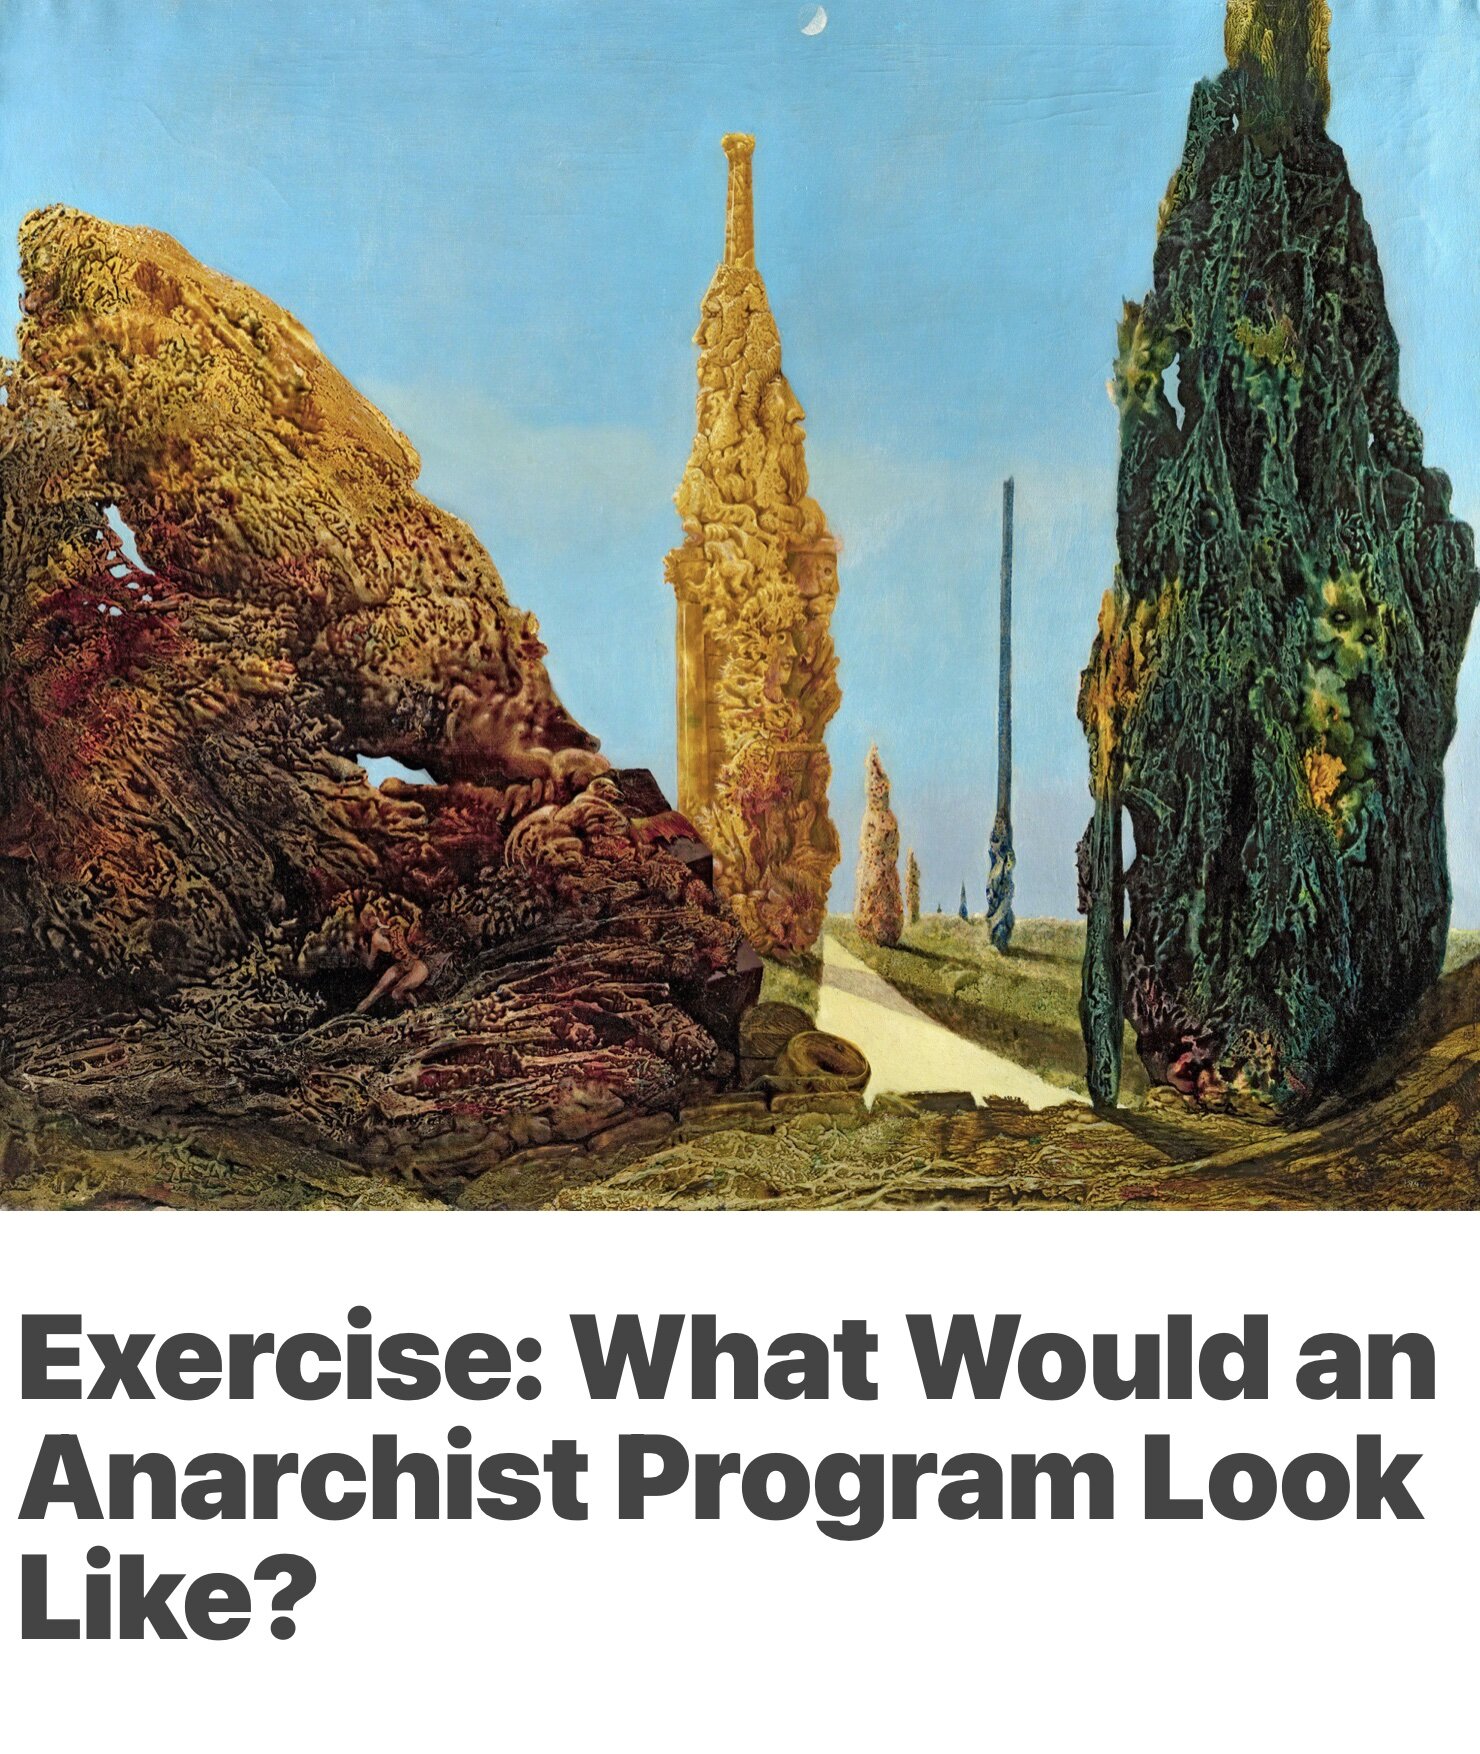 An Anarchist Program